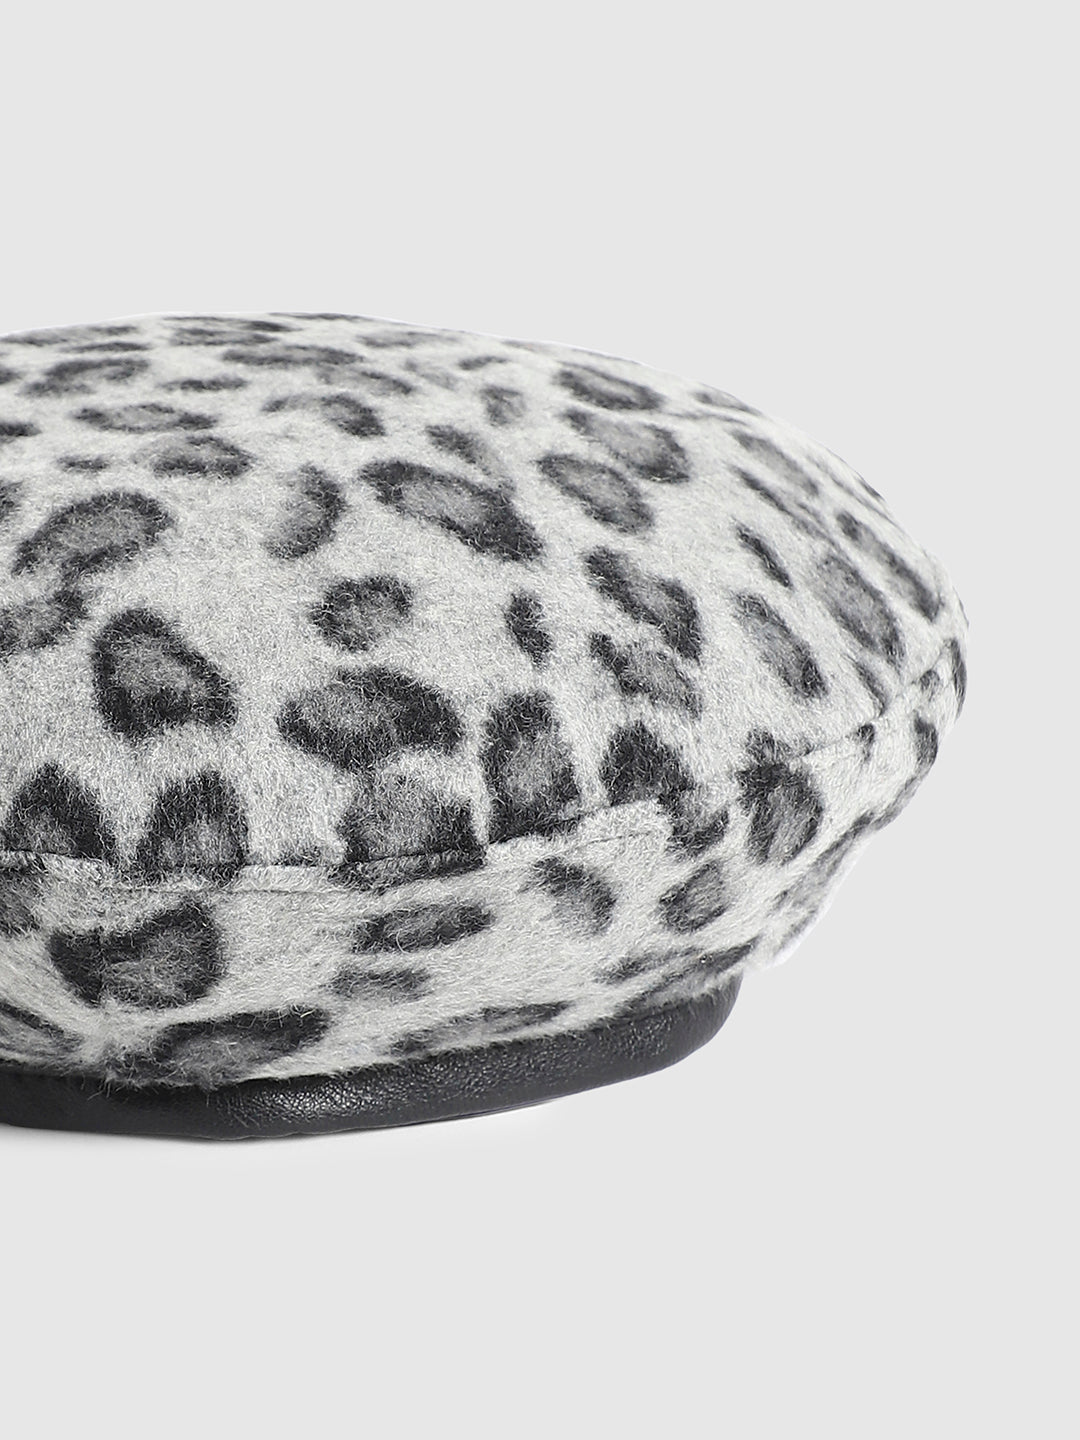 Leopard Print Beret Hat - Light Grey